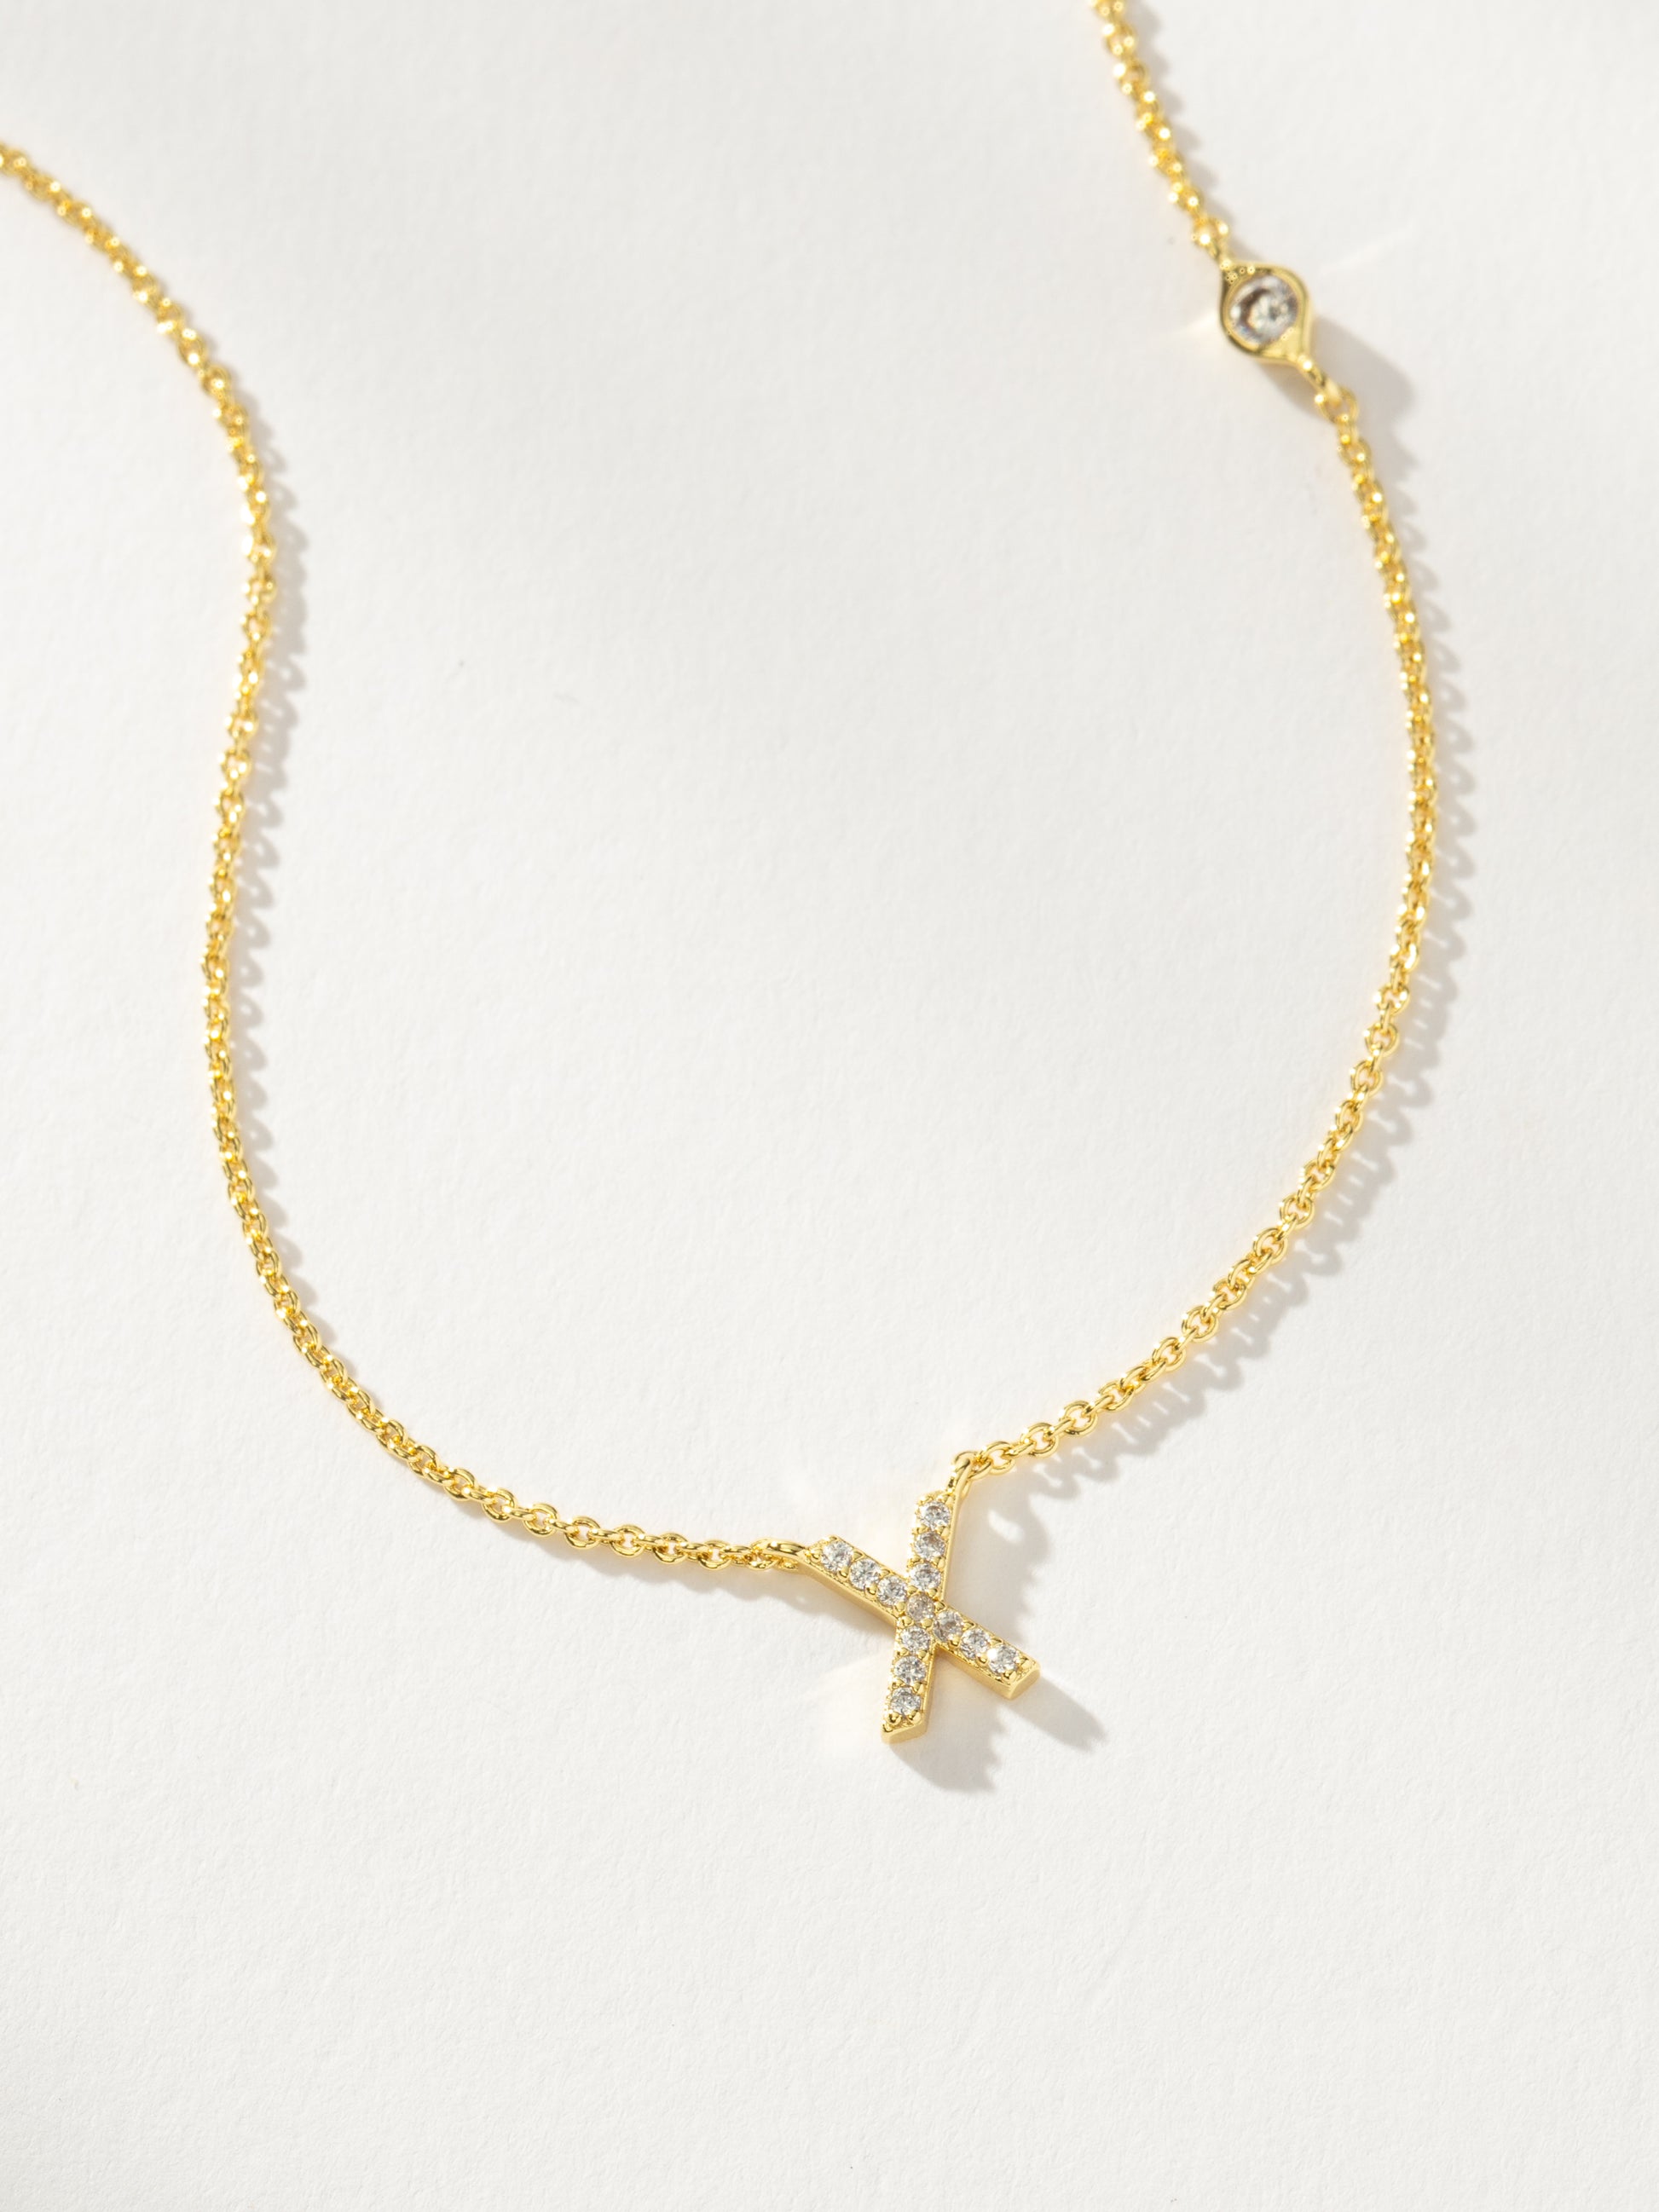 Pavé Initial Necklace | Gold X | Product Detail Image | Uncommon James